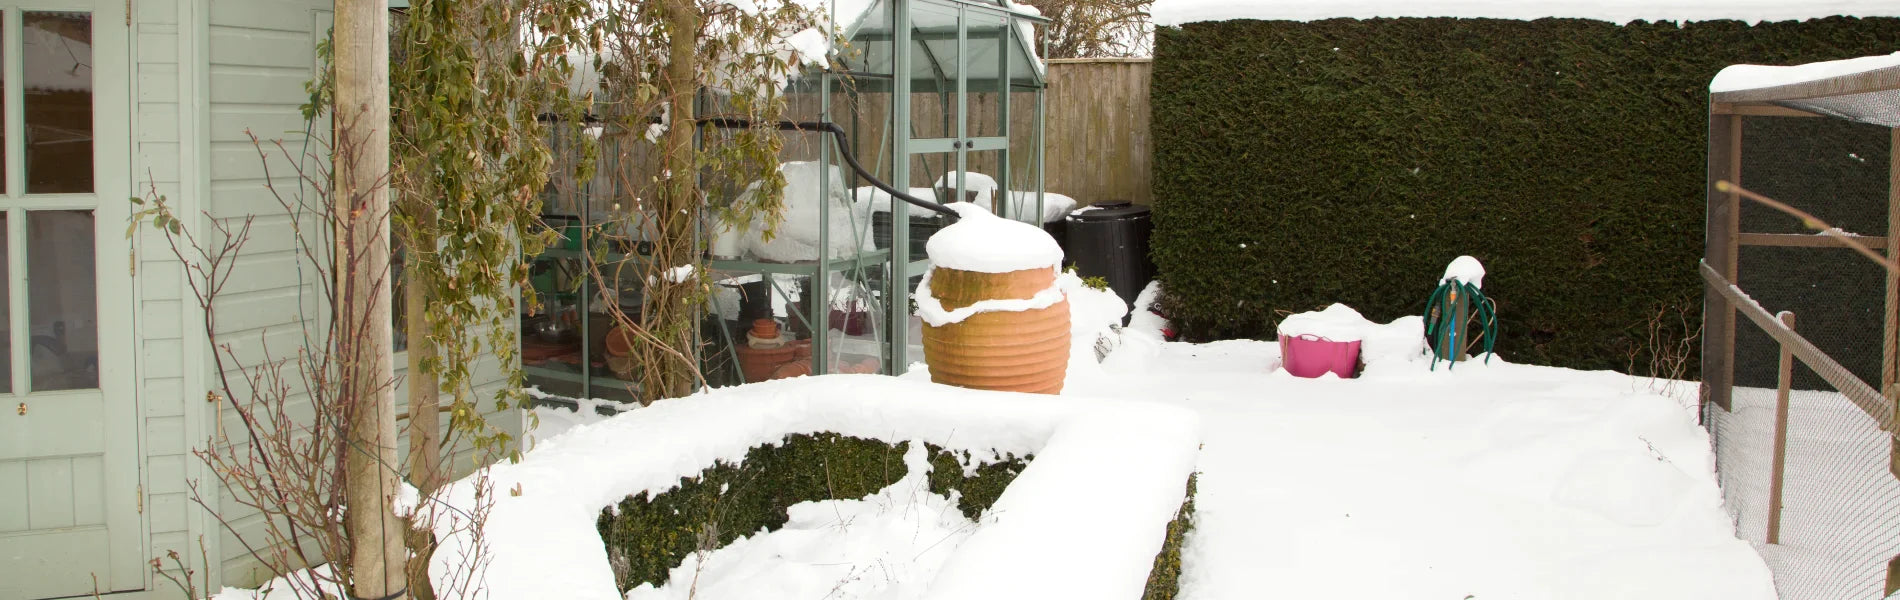 Snowy garden setting